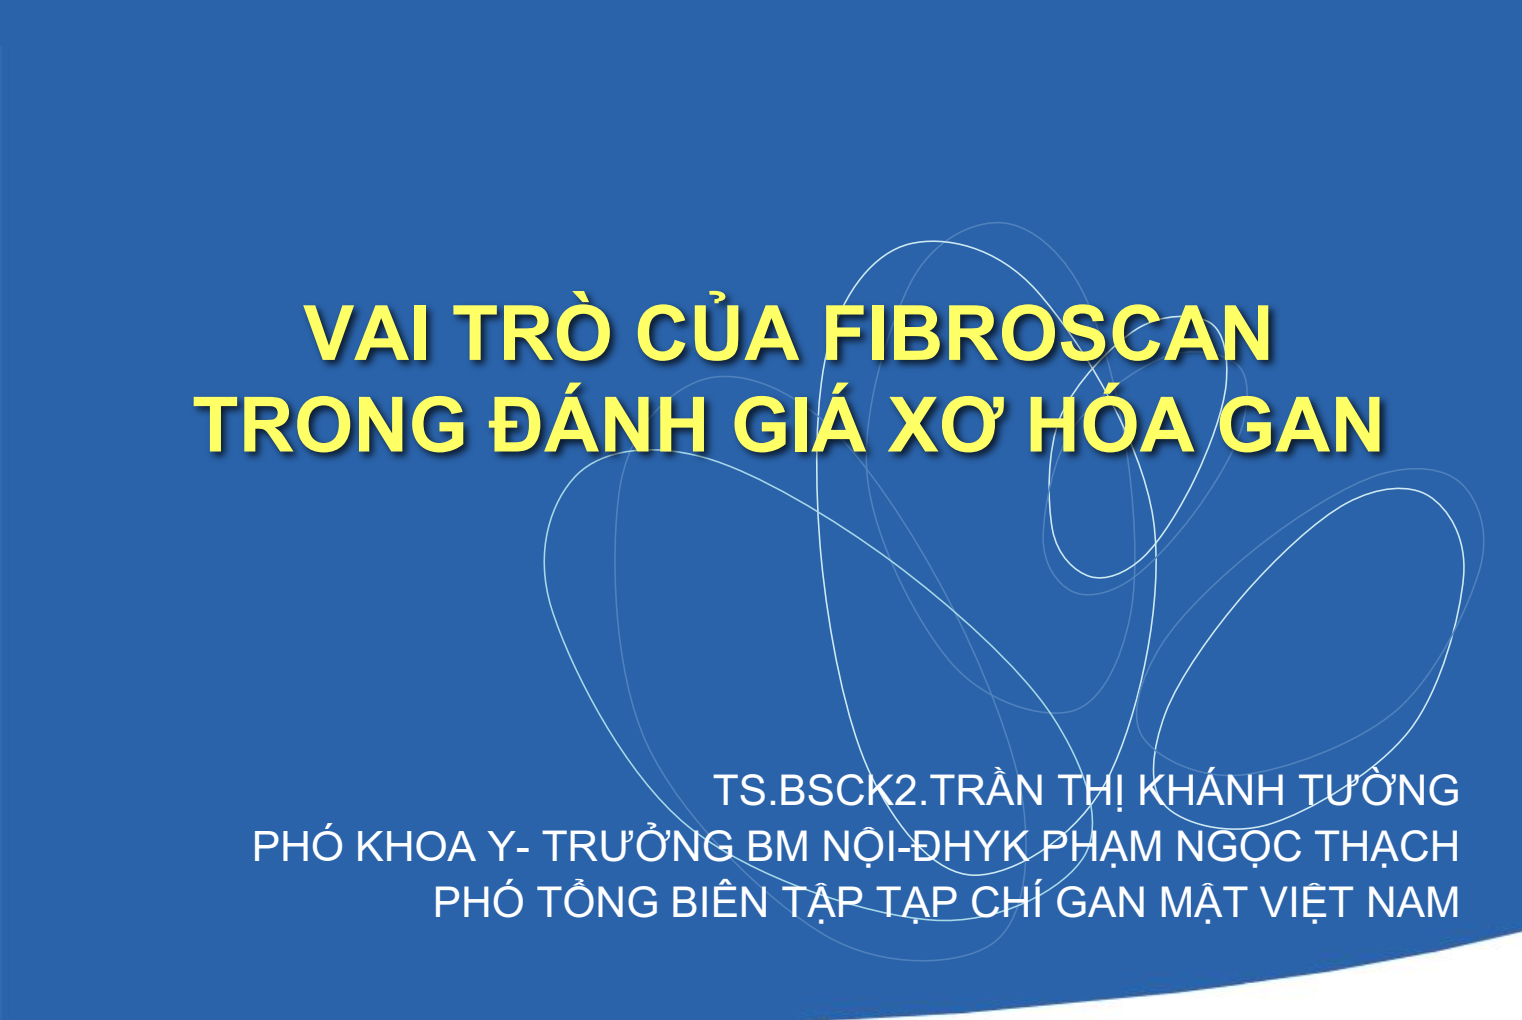 Vai-tro-cua-fibroscan-trong-danh-gia-xo-hoa-gan-tran-thi-khanh-tuong-2019